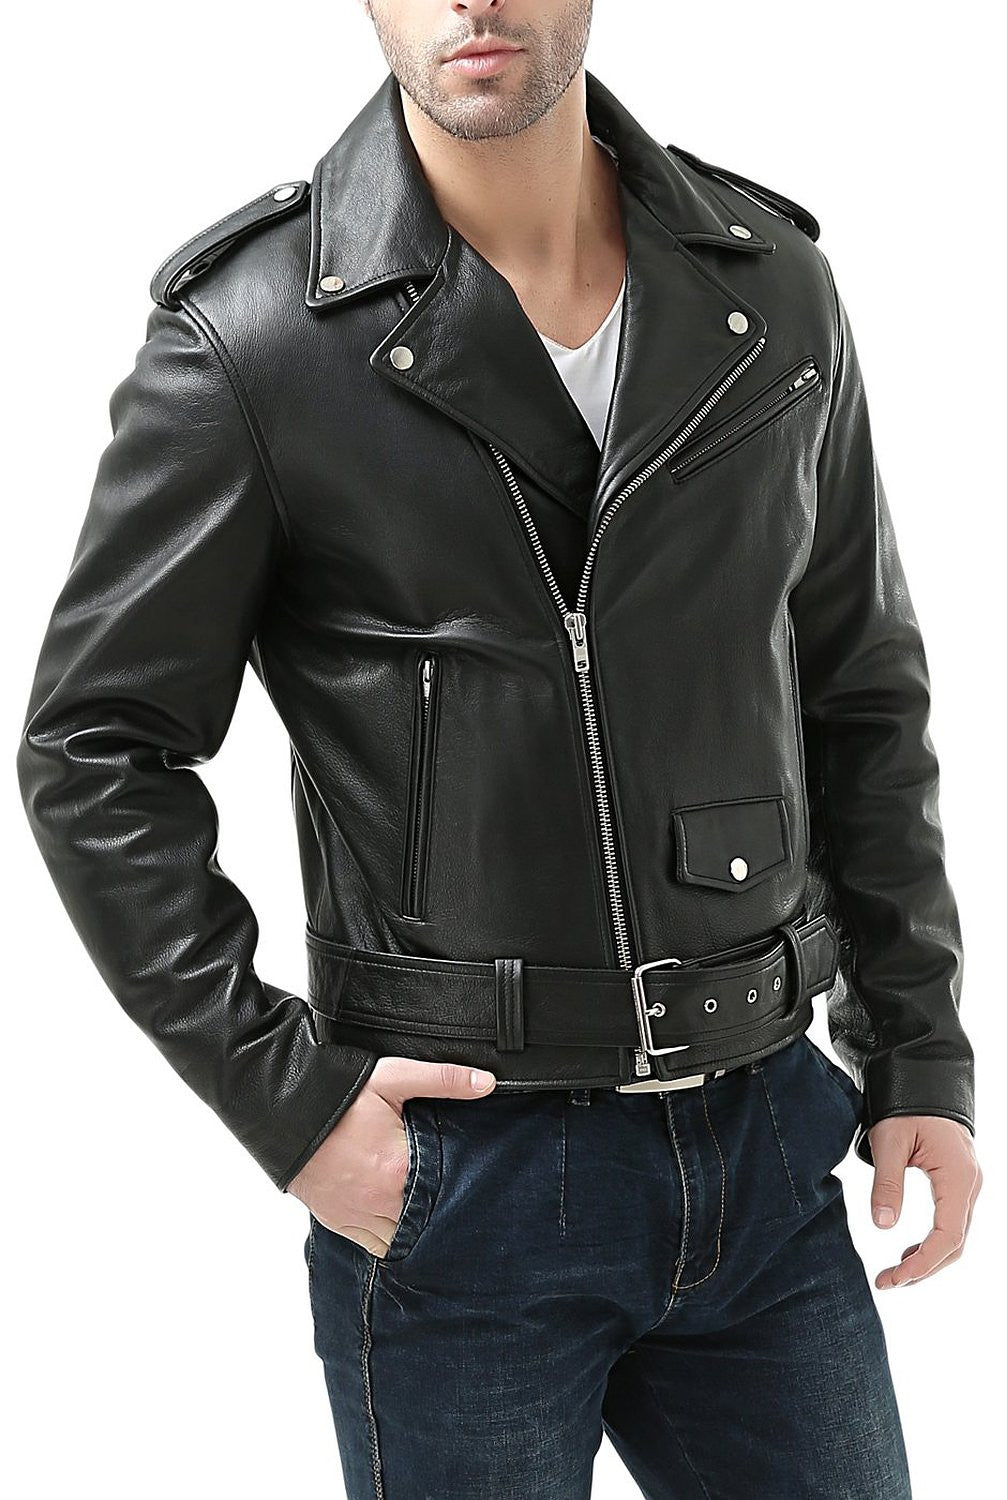 BGSD Men Classic Cowhide Leather Motorcycle Jacket